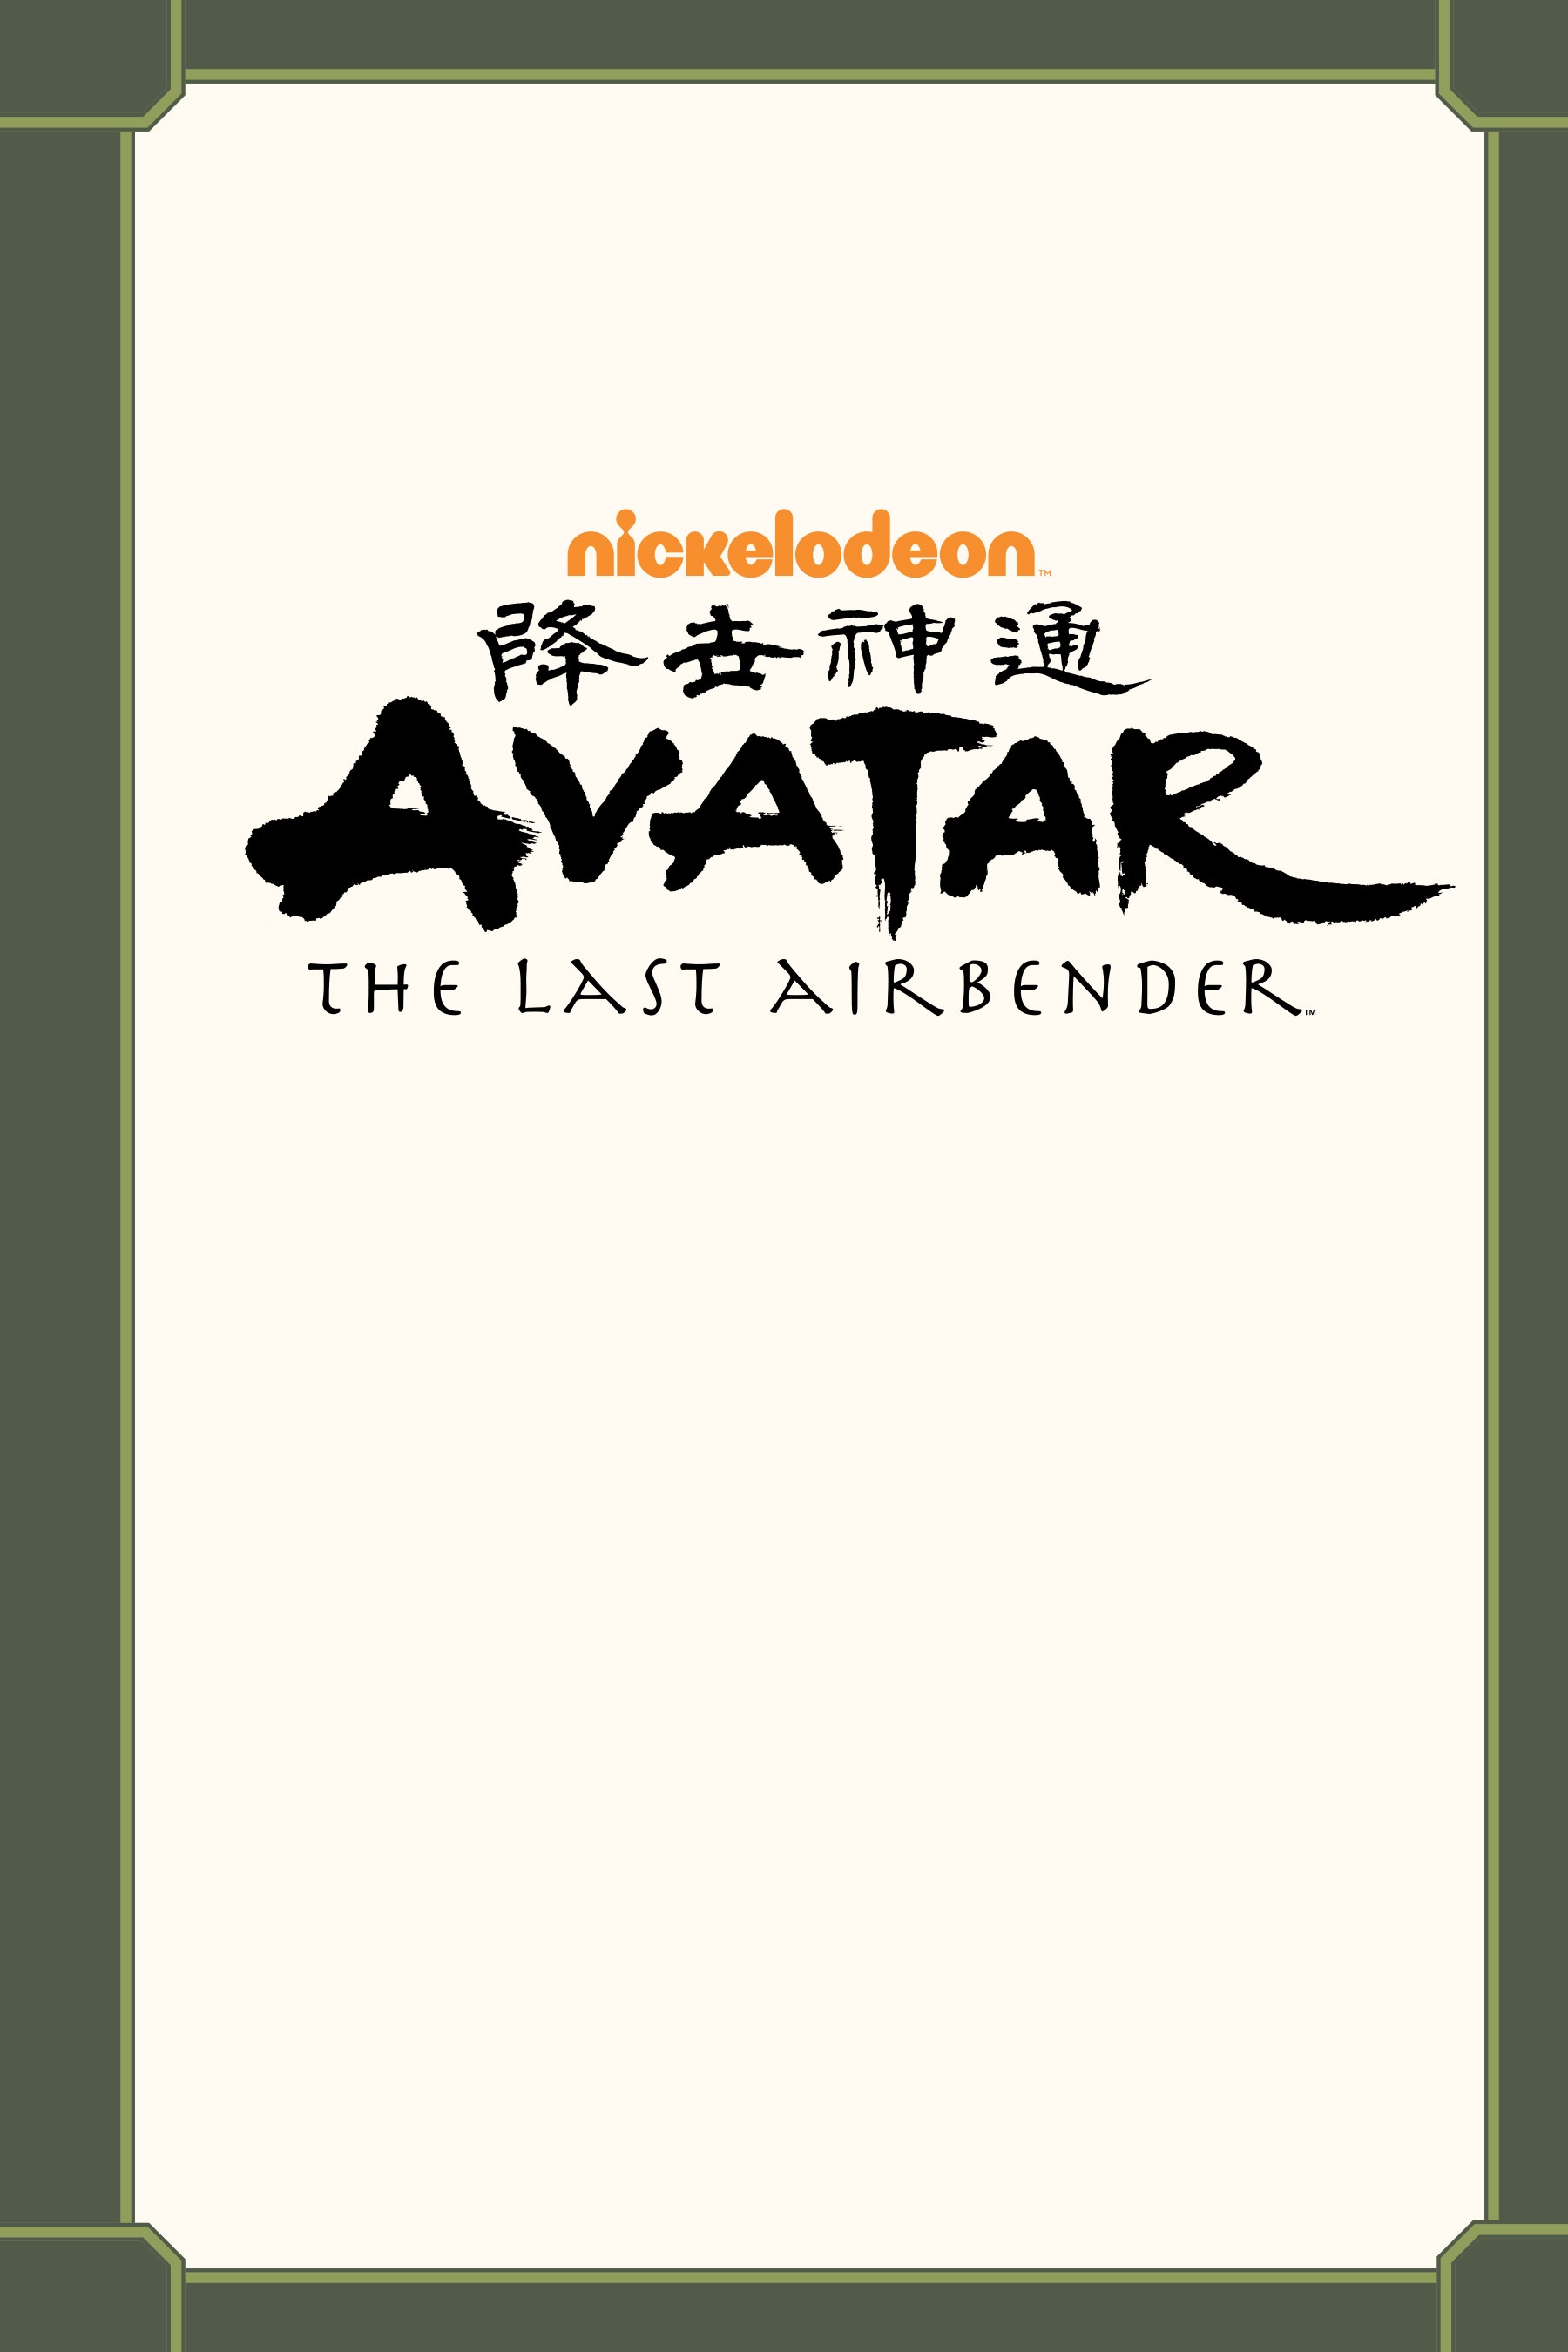 Read online Nickelodeon Avatar: The Last Airbender - Toph Beifong's Metalbending Academy comic -  Issue # TPB - 2